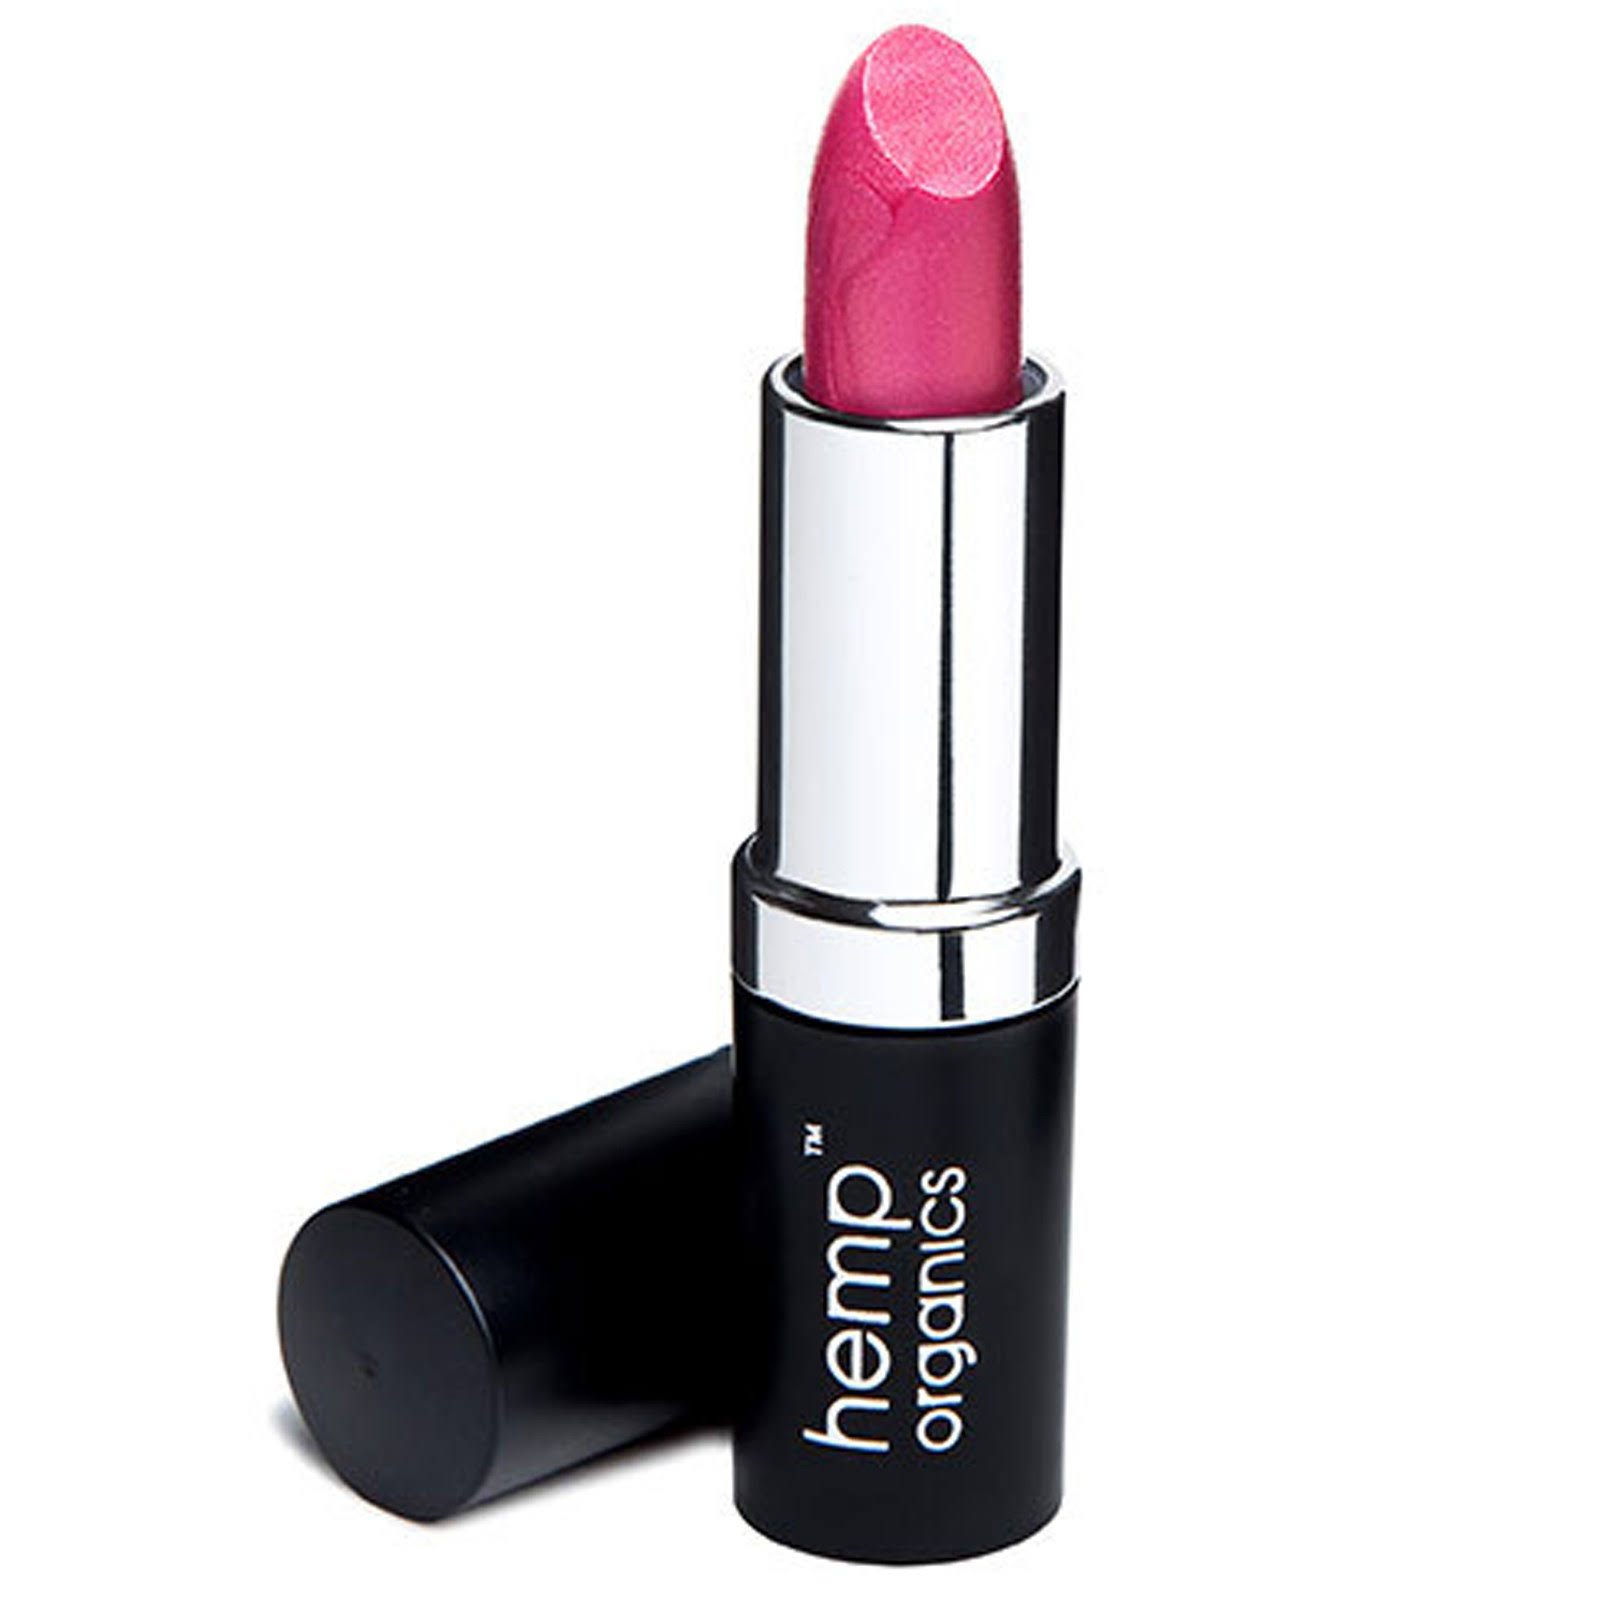 Colorganics Hemp Organics Lipstick - Pink Satin, 0.14oz